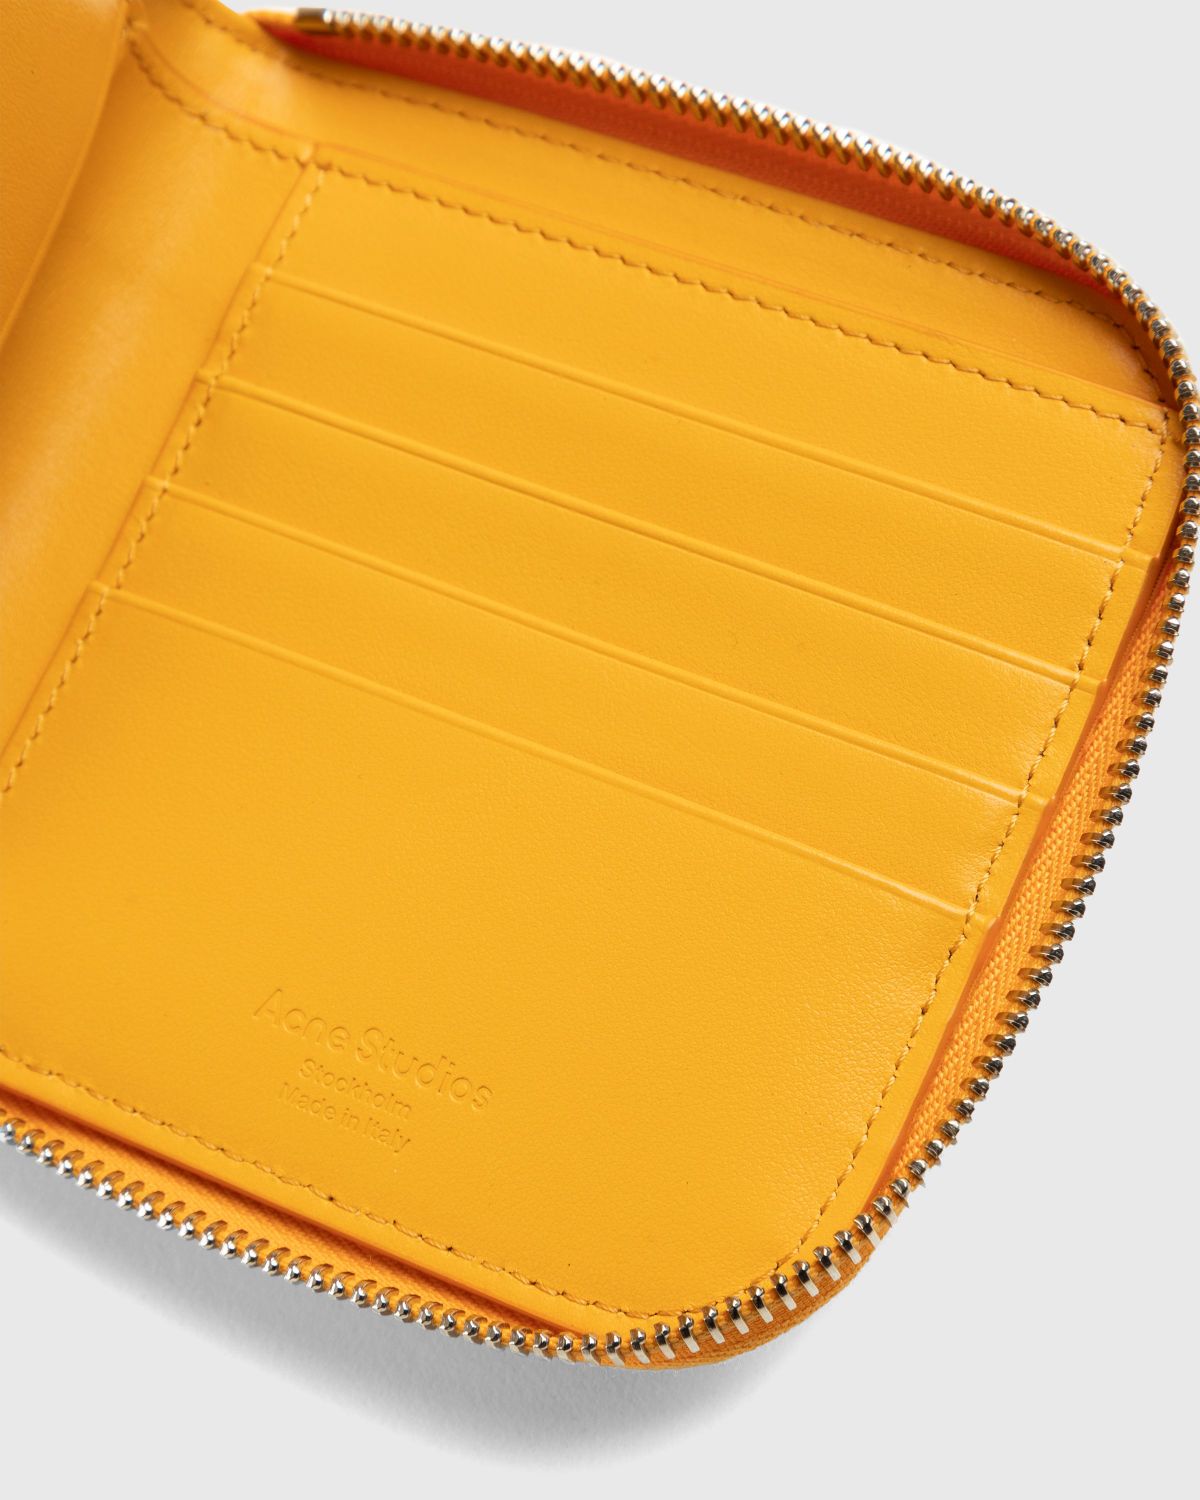 Acne Studios – Leather Zip Wallet Orange - Wallets - Orange - Image 5